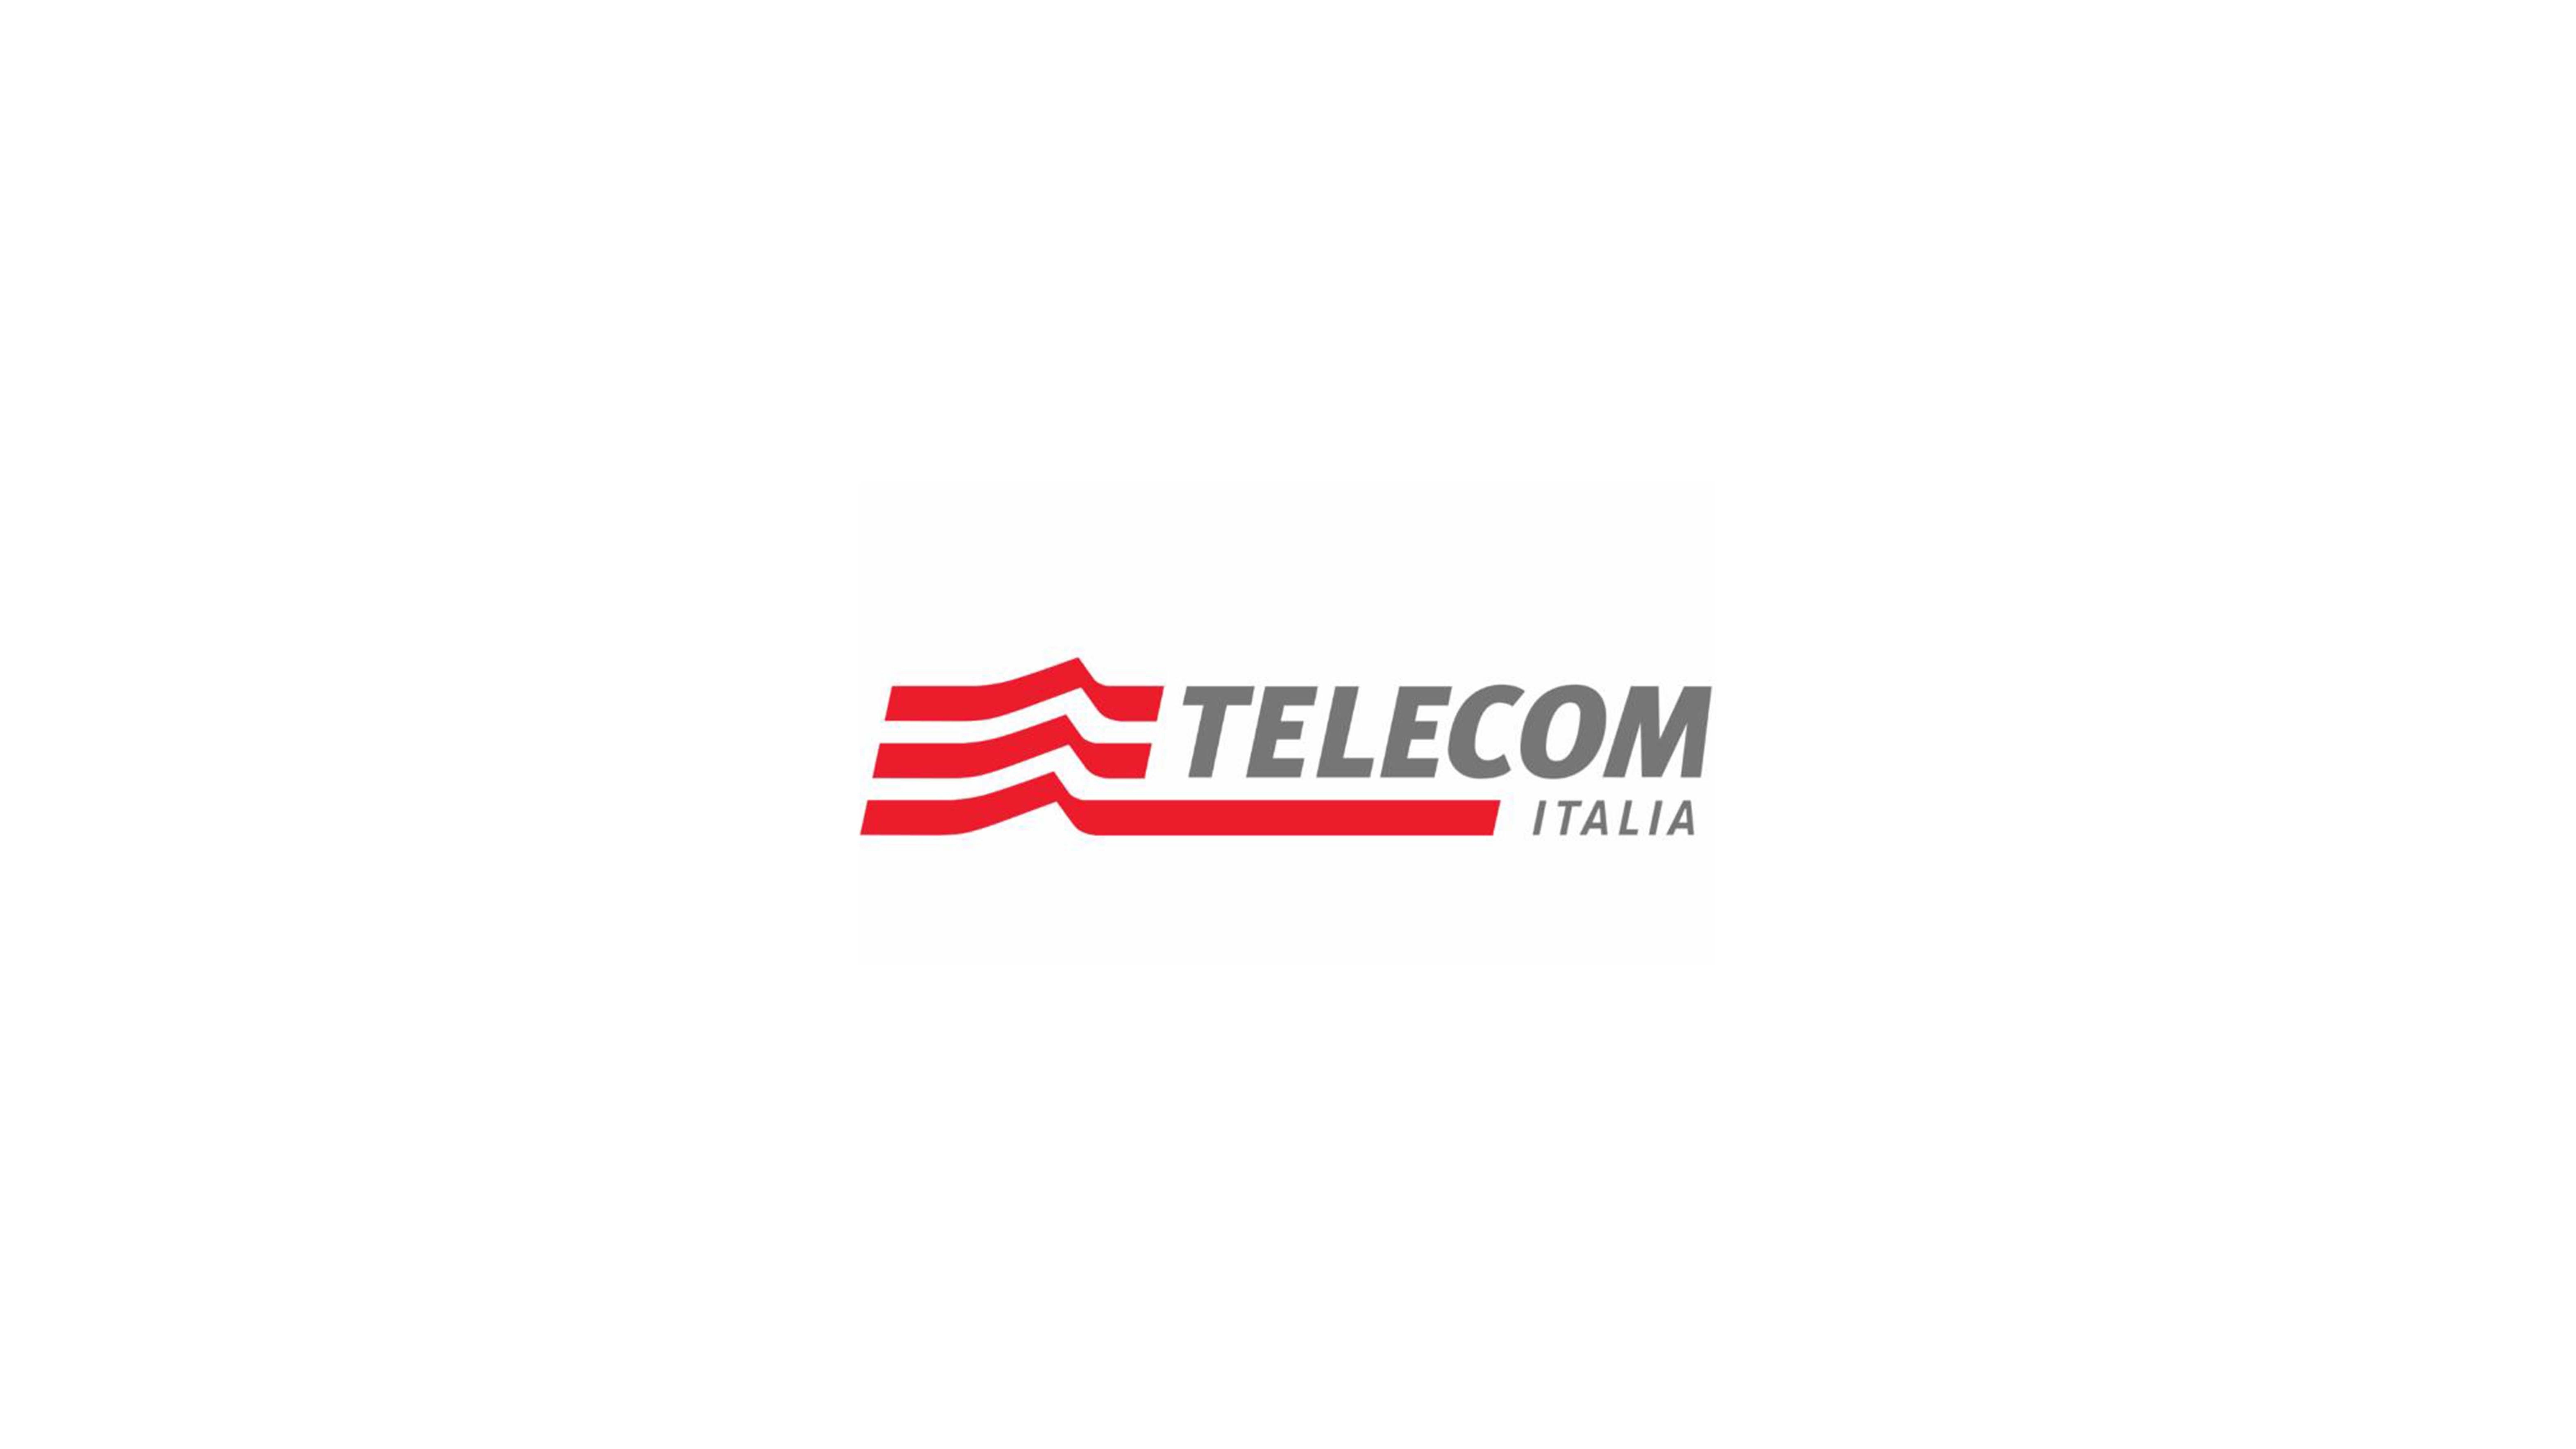 Telecom italia 意大利电信的历史LOGO